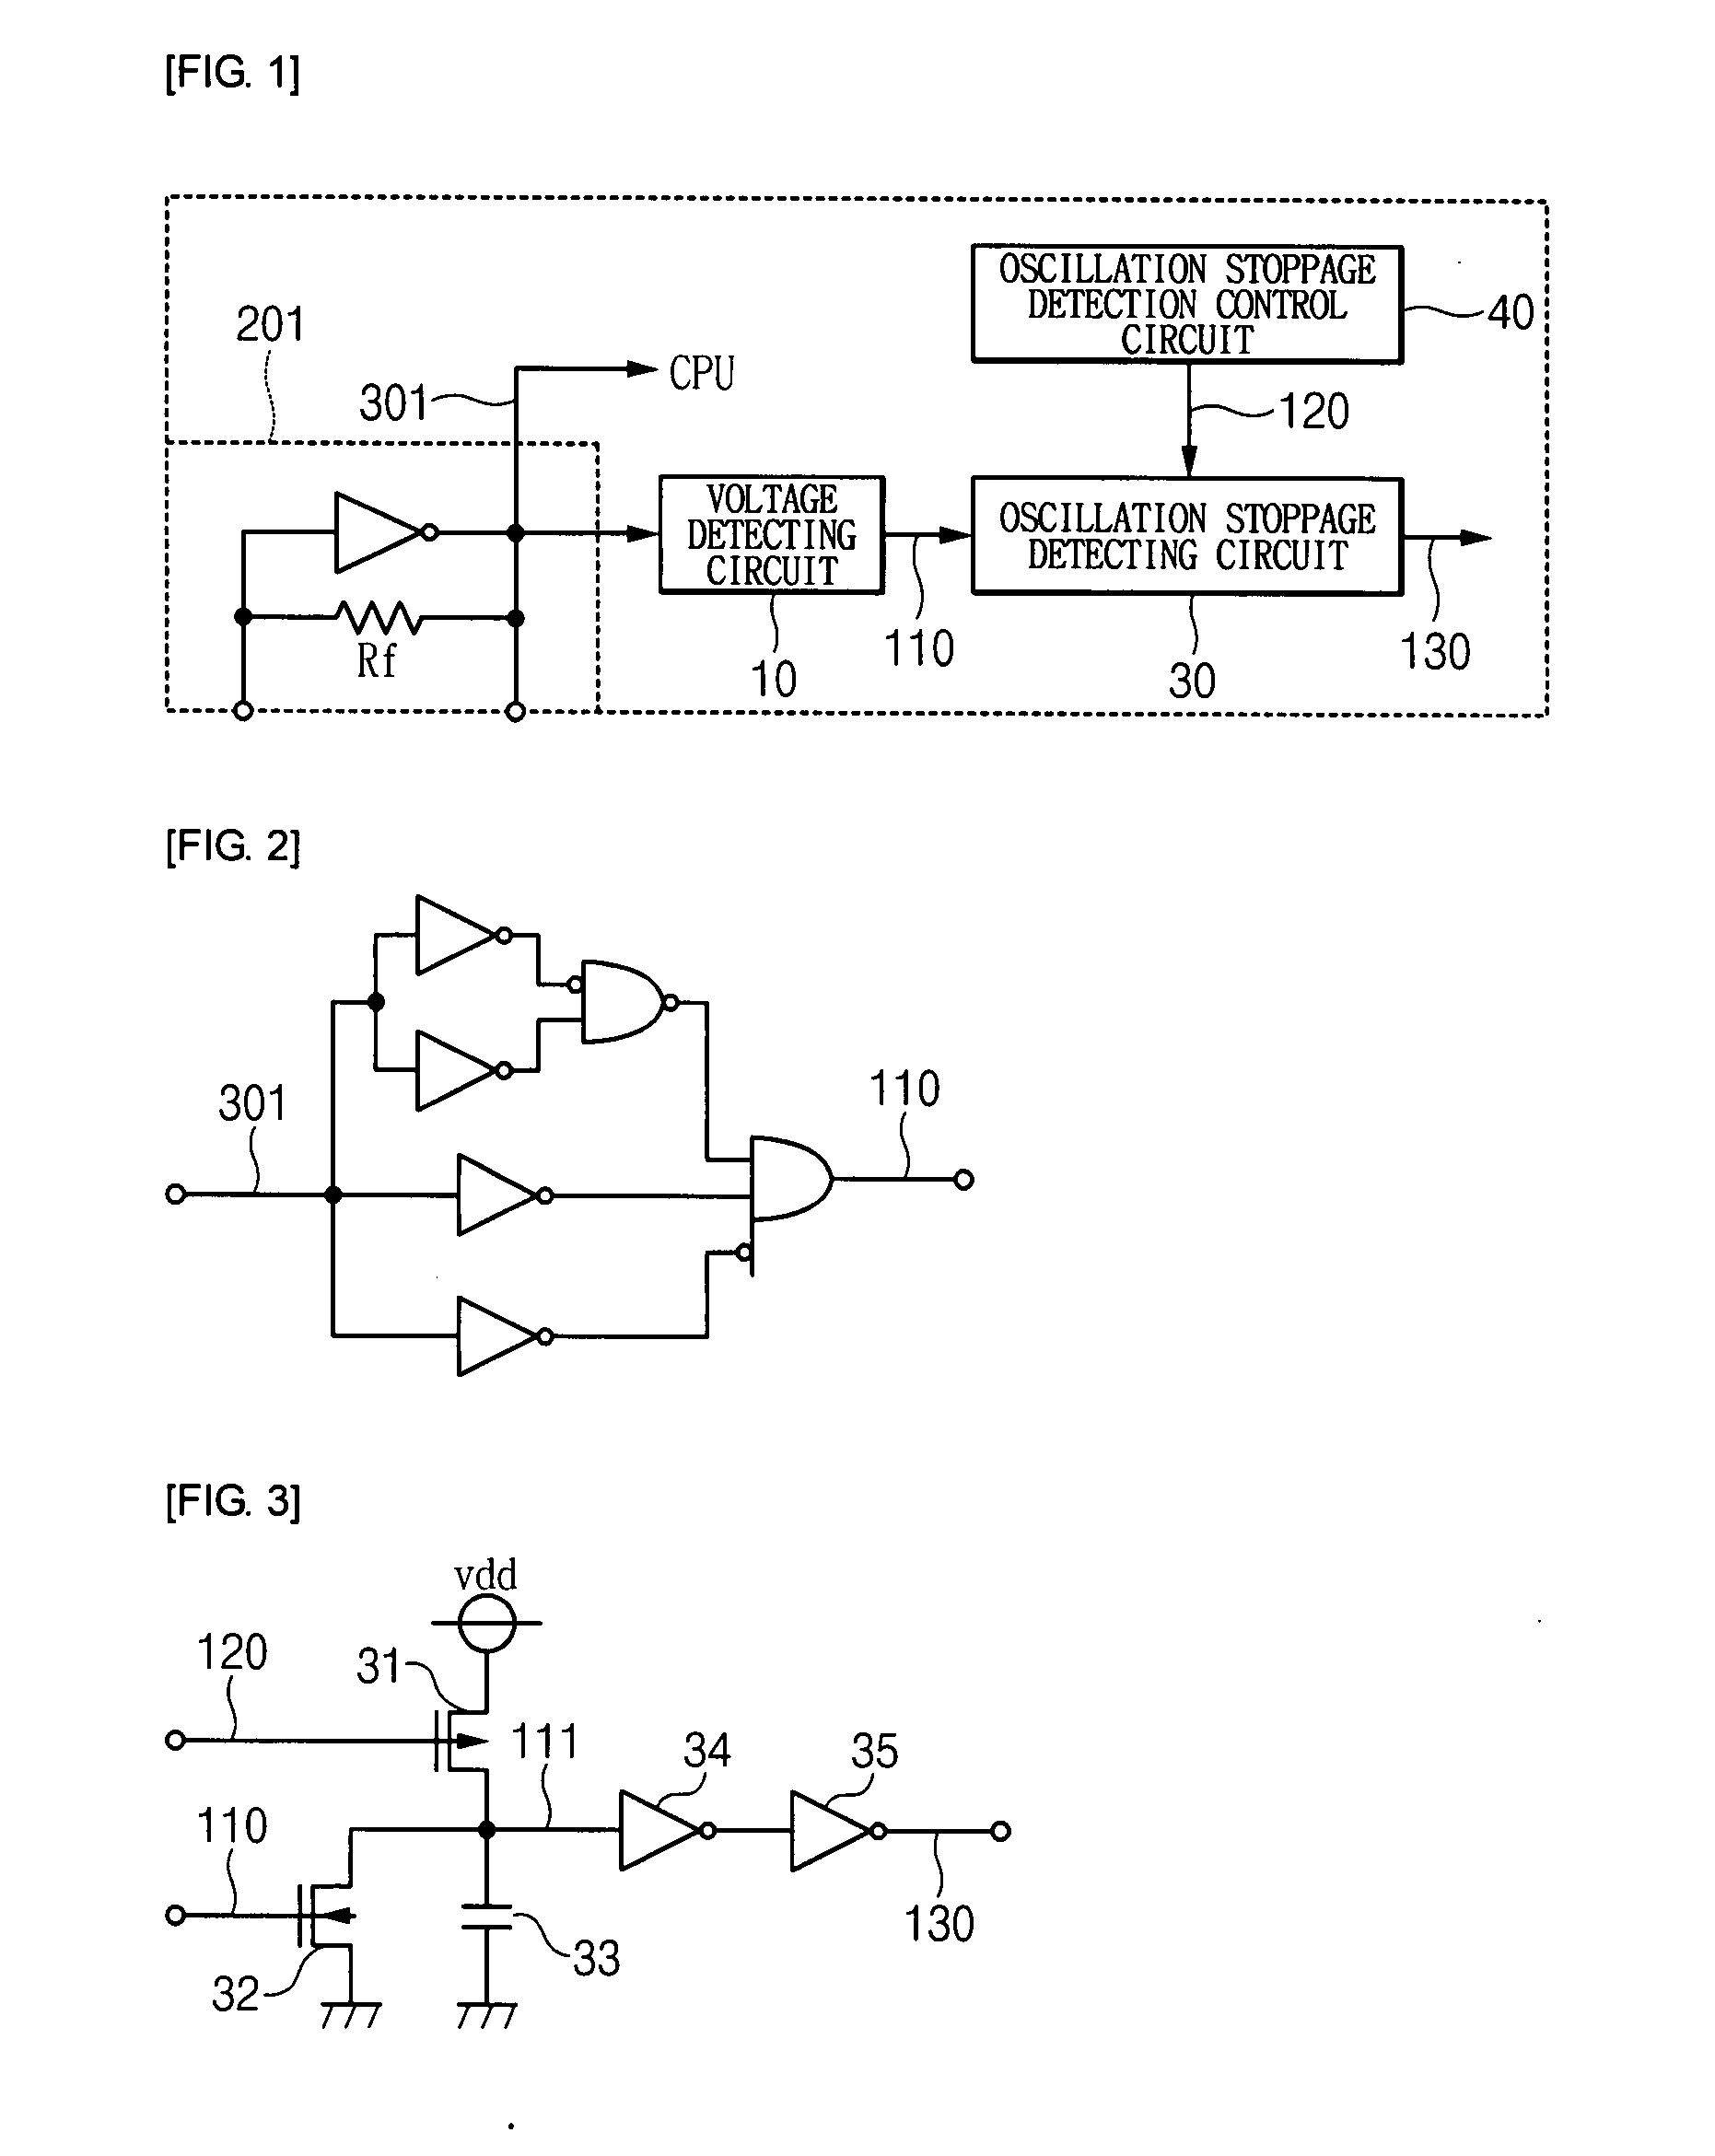 Oscillation stabilization circuit